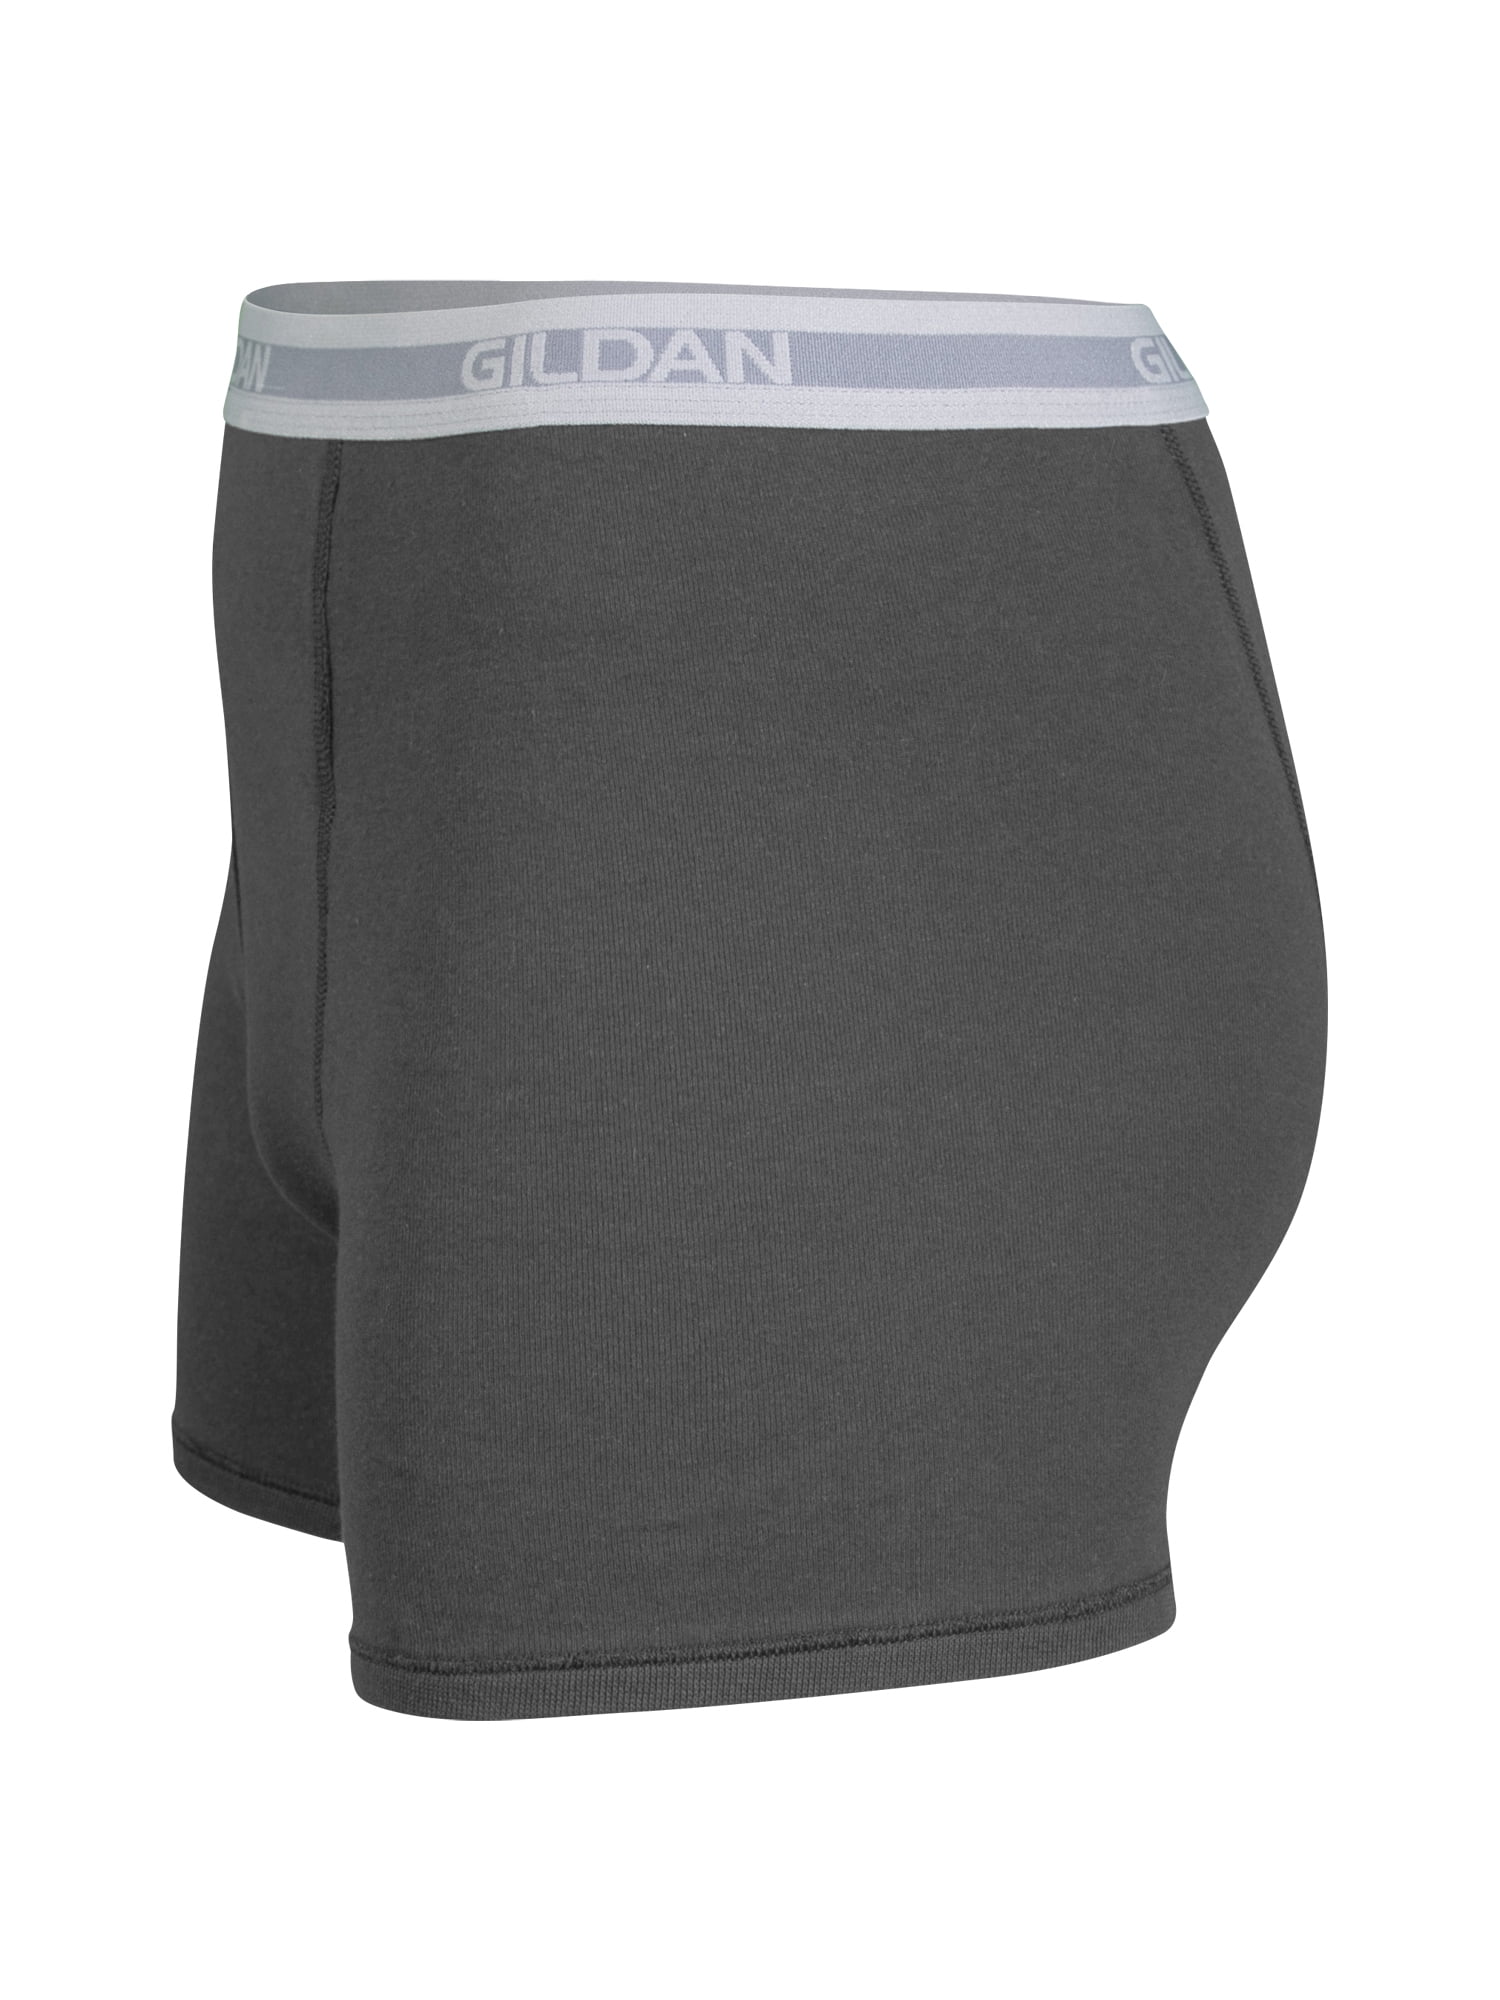 Gildan Adult Men's Short Leg Boxer Briefs, 5-Pack, Sizes S-2XL, 3 Inseam 